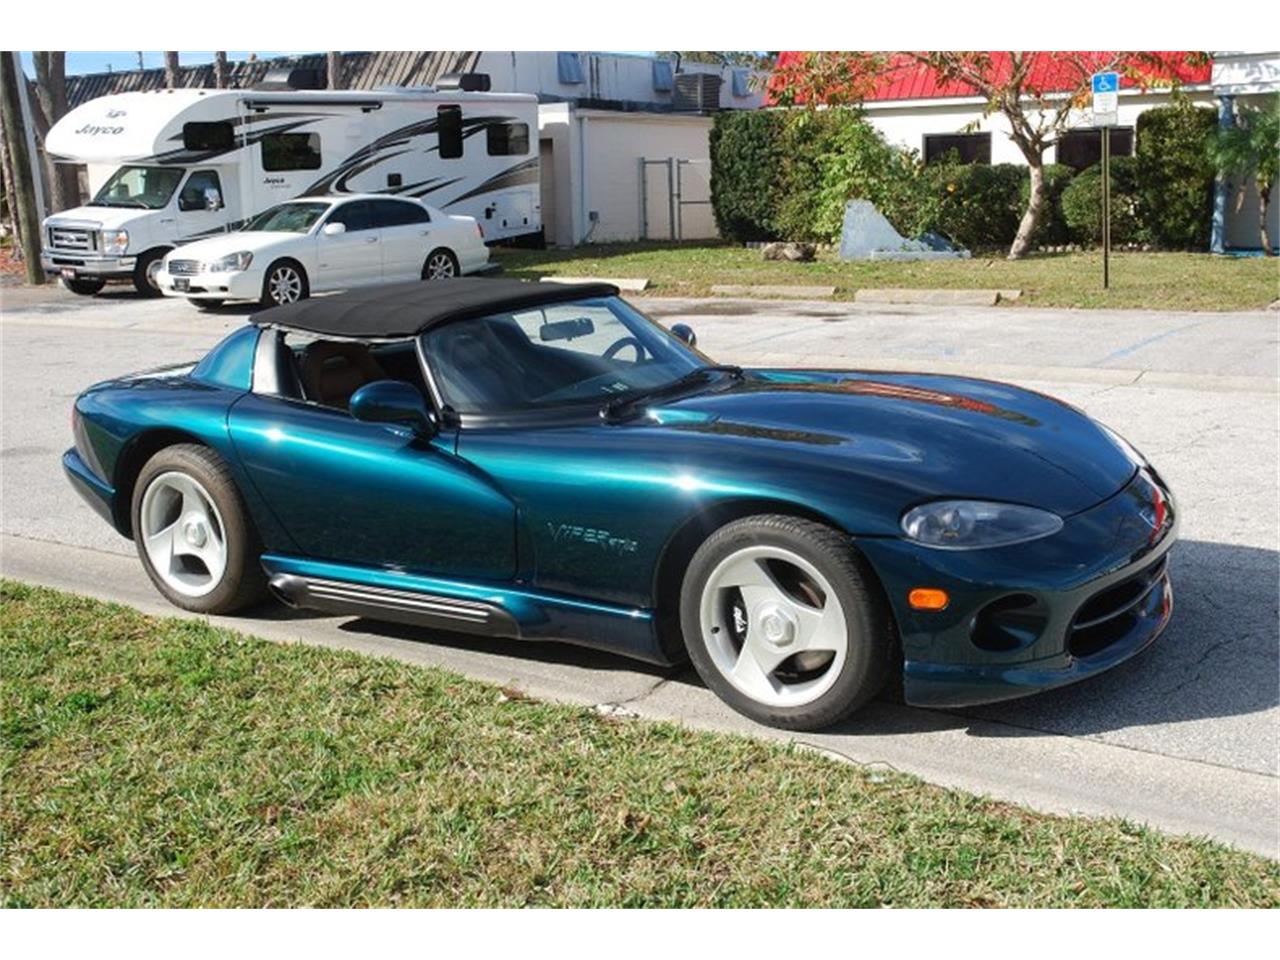 For Sale at Auction: 1995 Dodge Viper in Punta Gorda, Florida for sale in Punta Gorda, FL